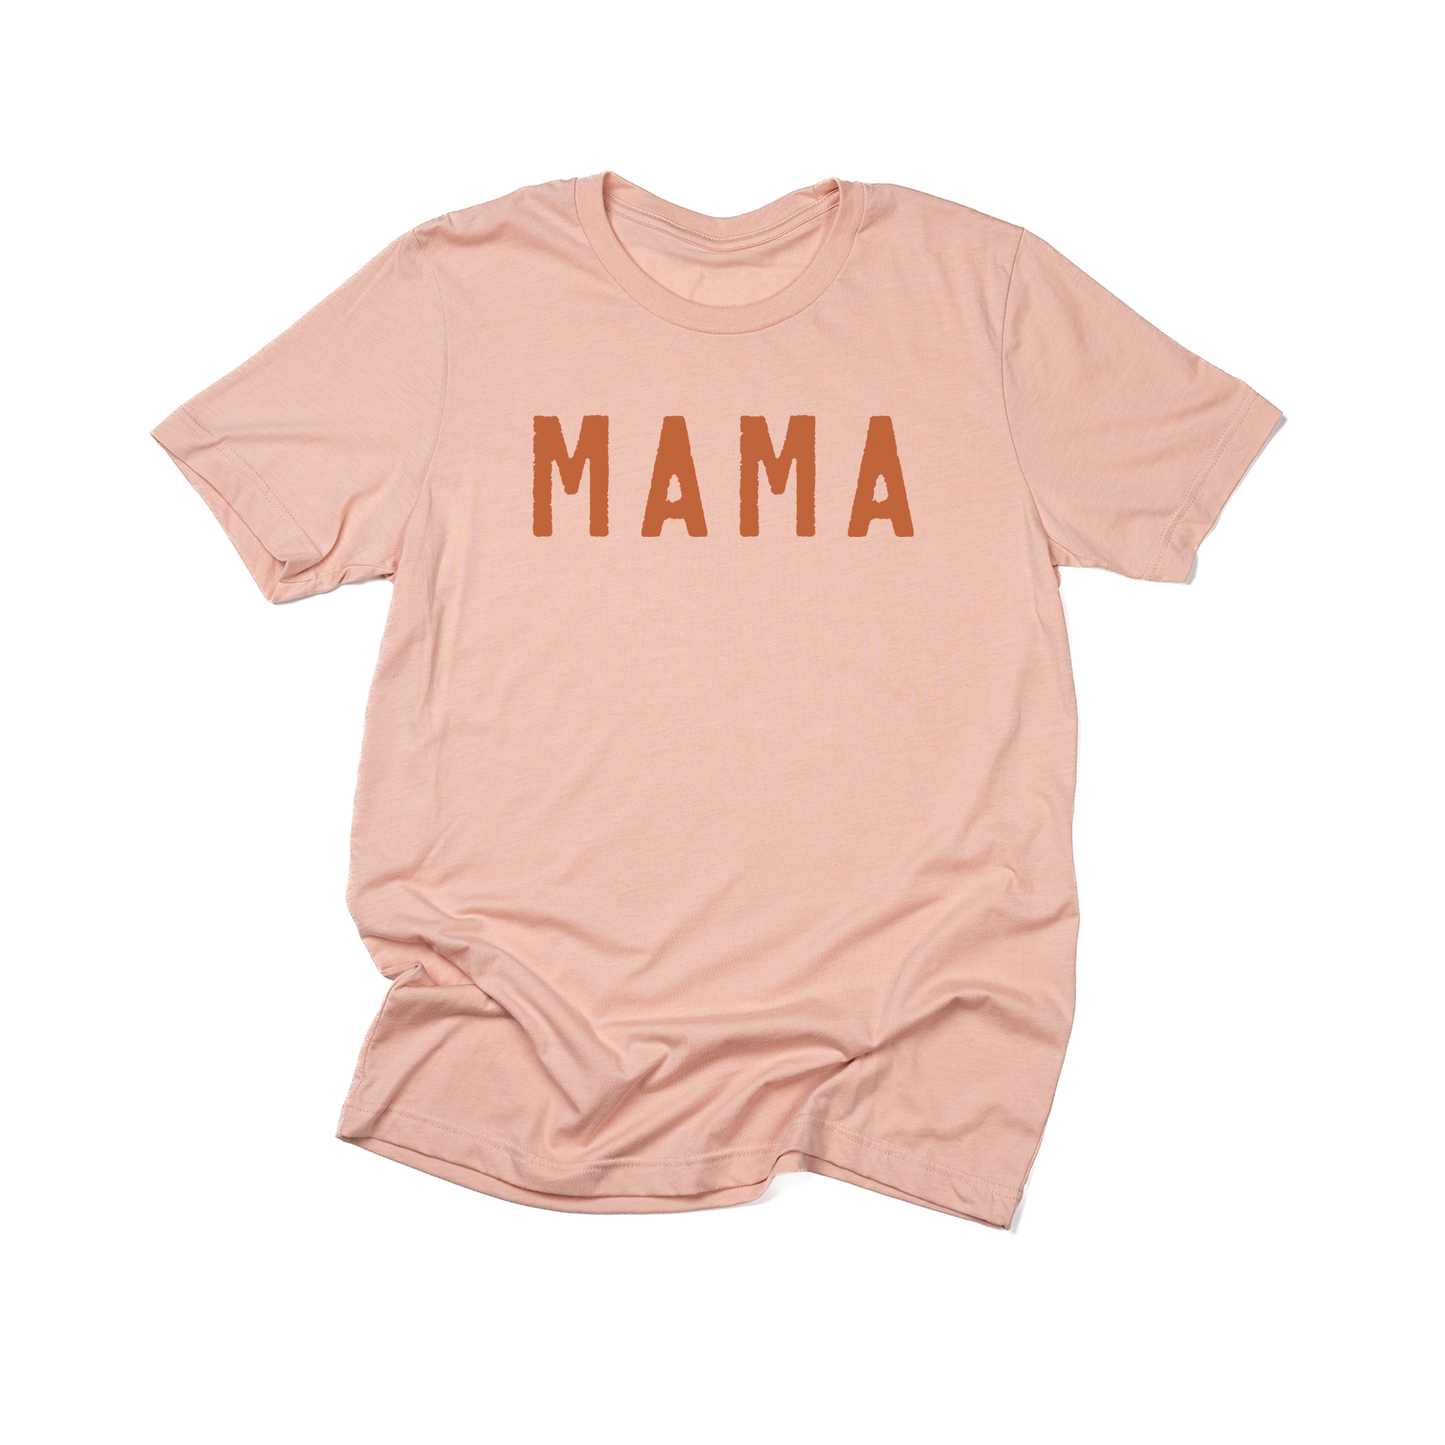 Mama (Rough, Rust) - Tee (Peach)